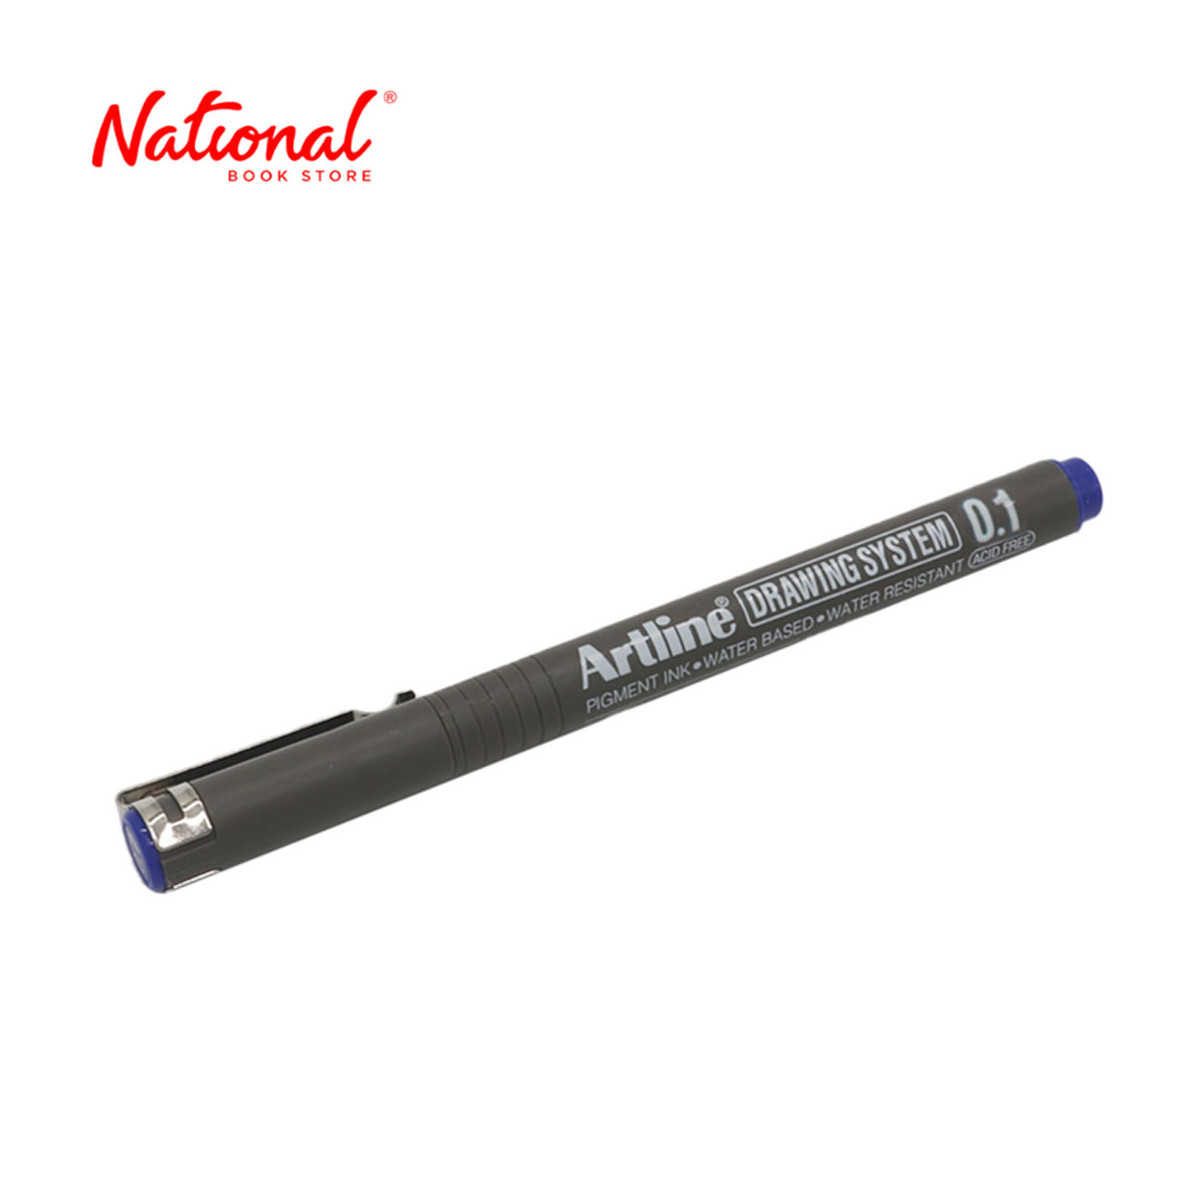 Artline Drawing System Drawing Pen, Blue - Writing Supplies - Art Supplies